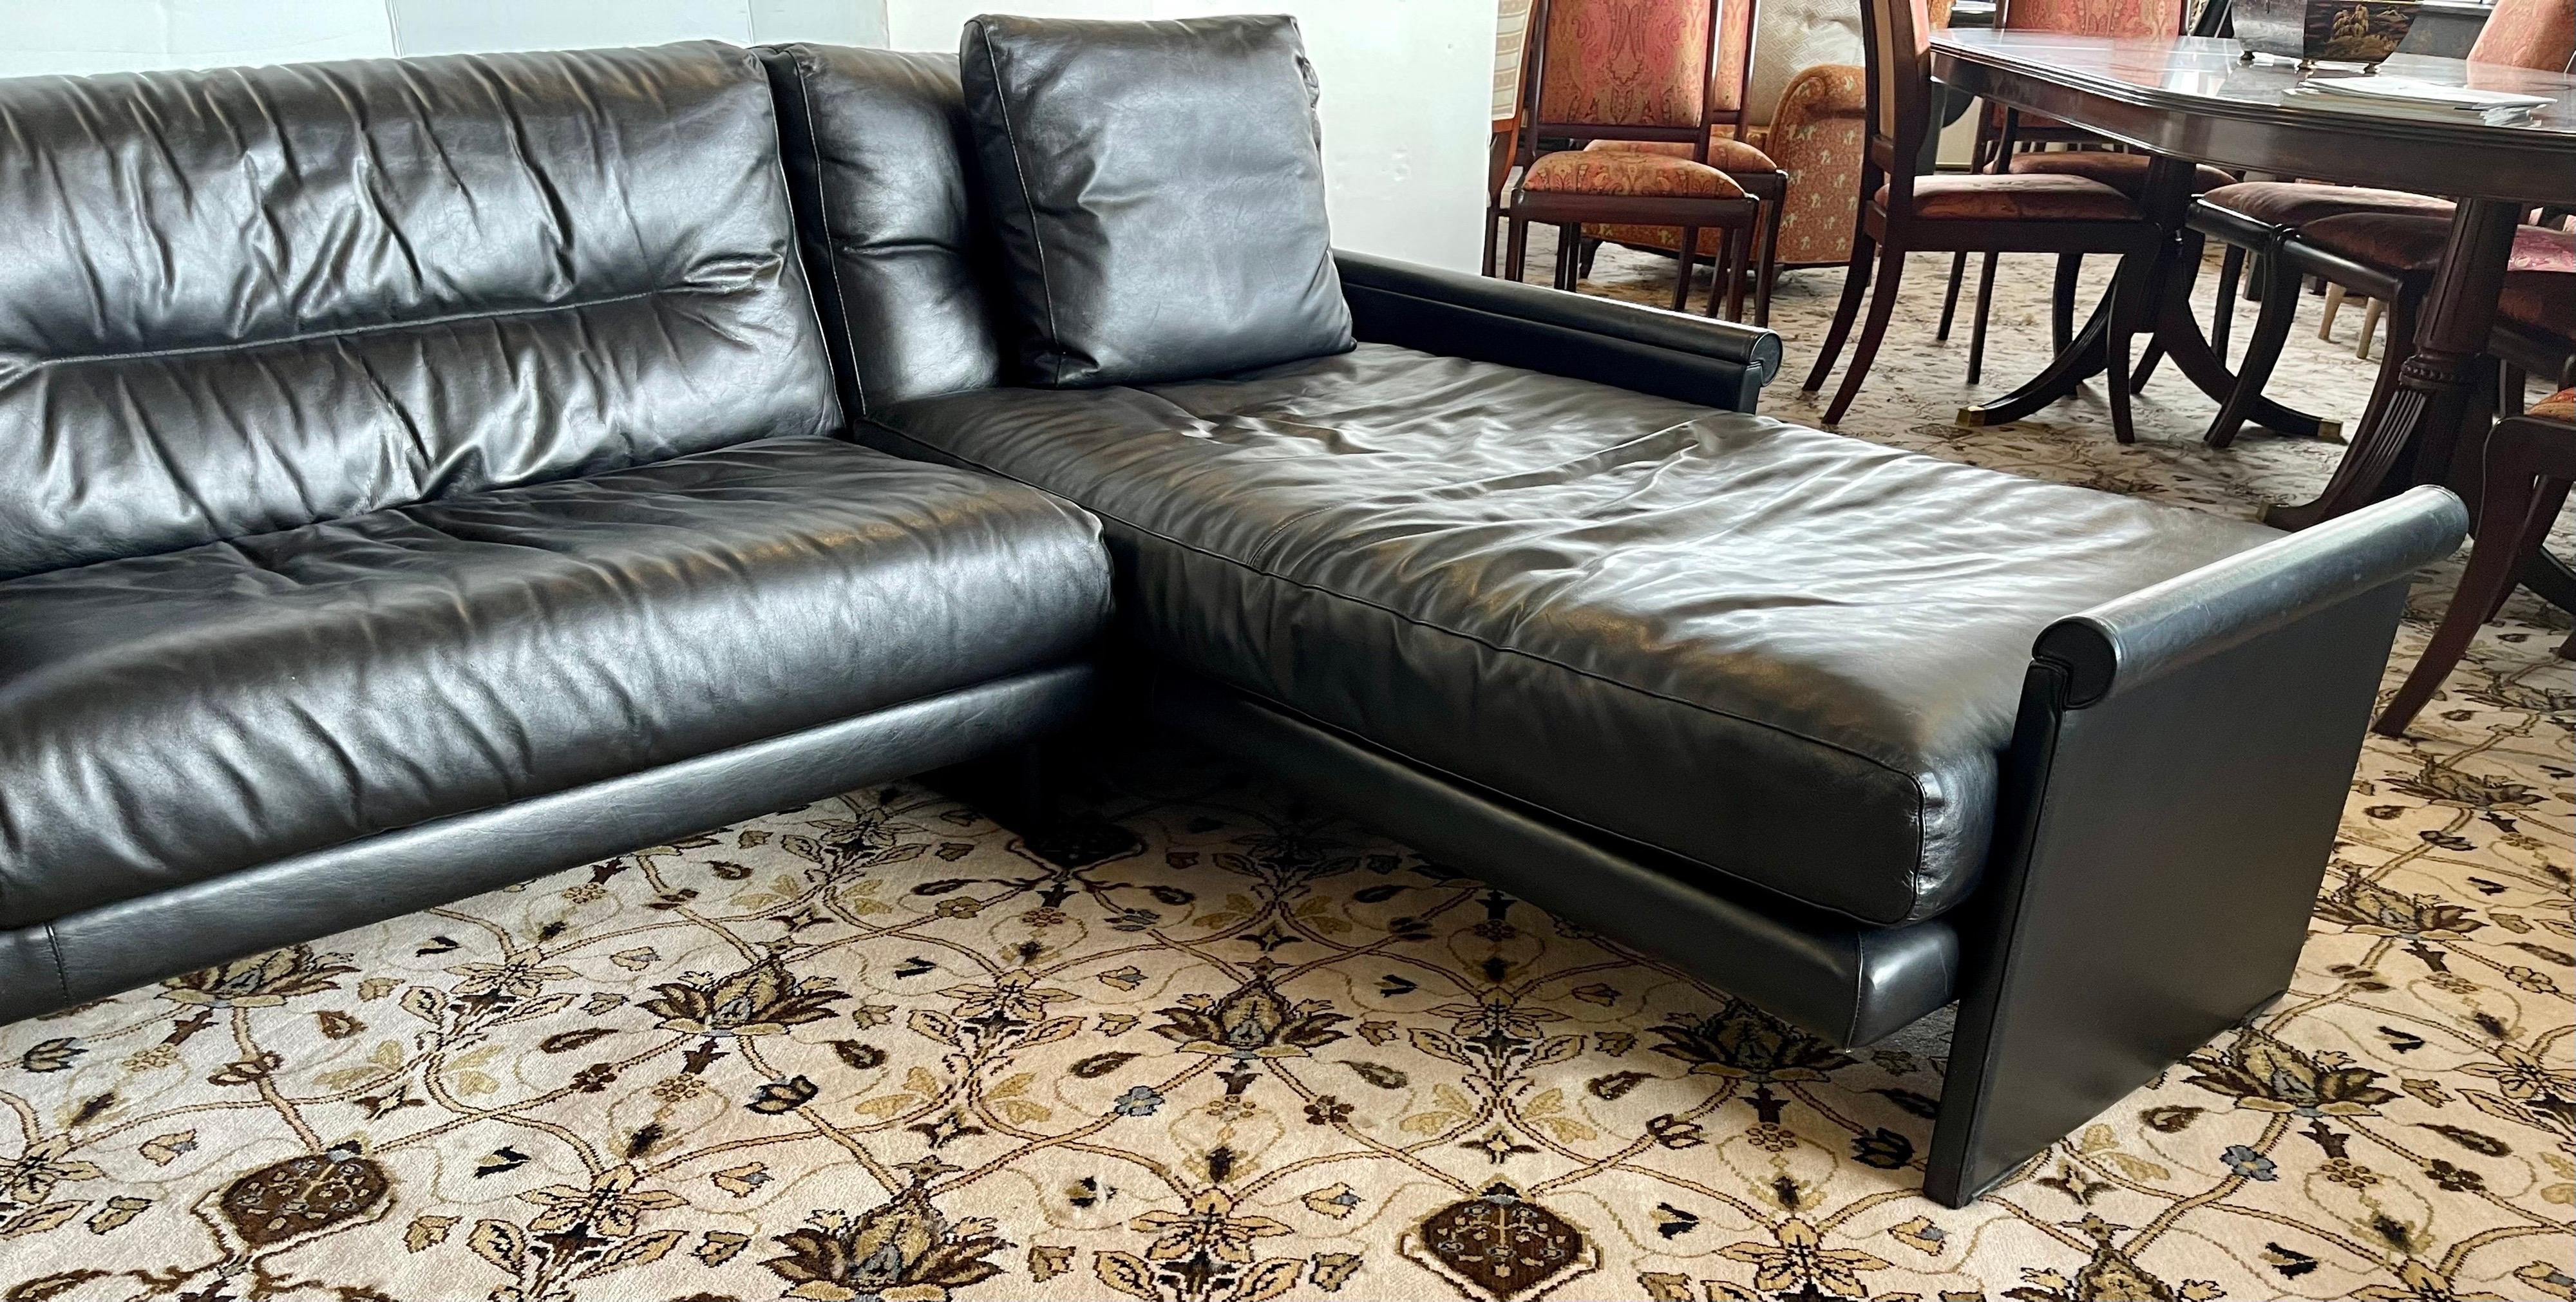 Authentic Saporiti Italia Large Sleek Black Leather Sofa Sectional Made in Italy 3